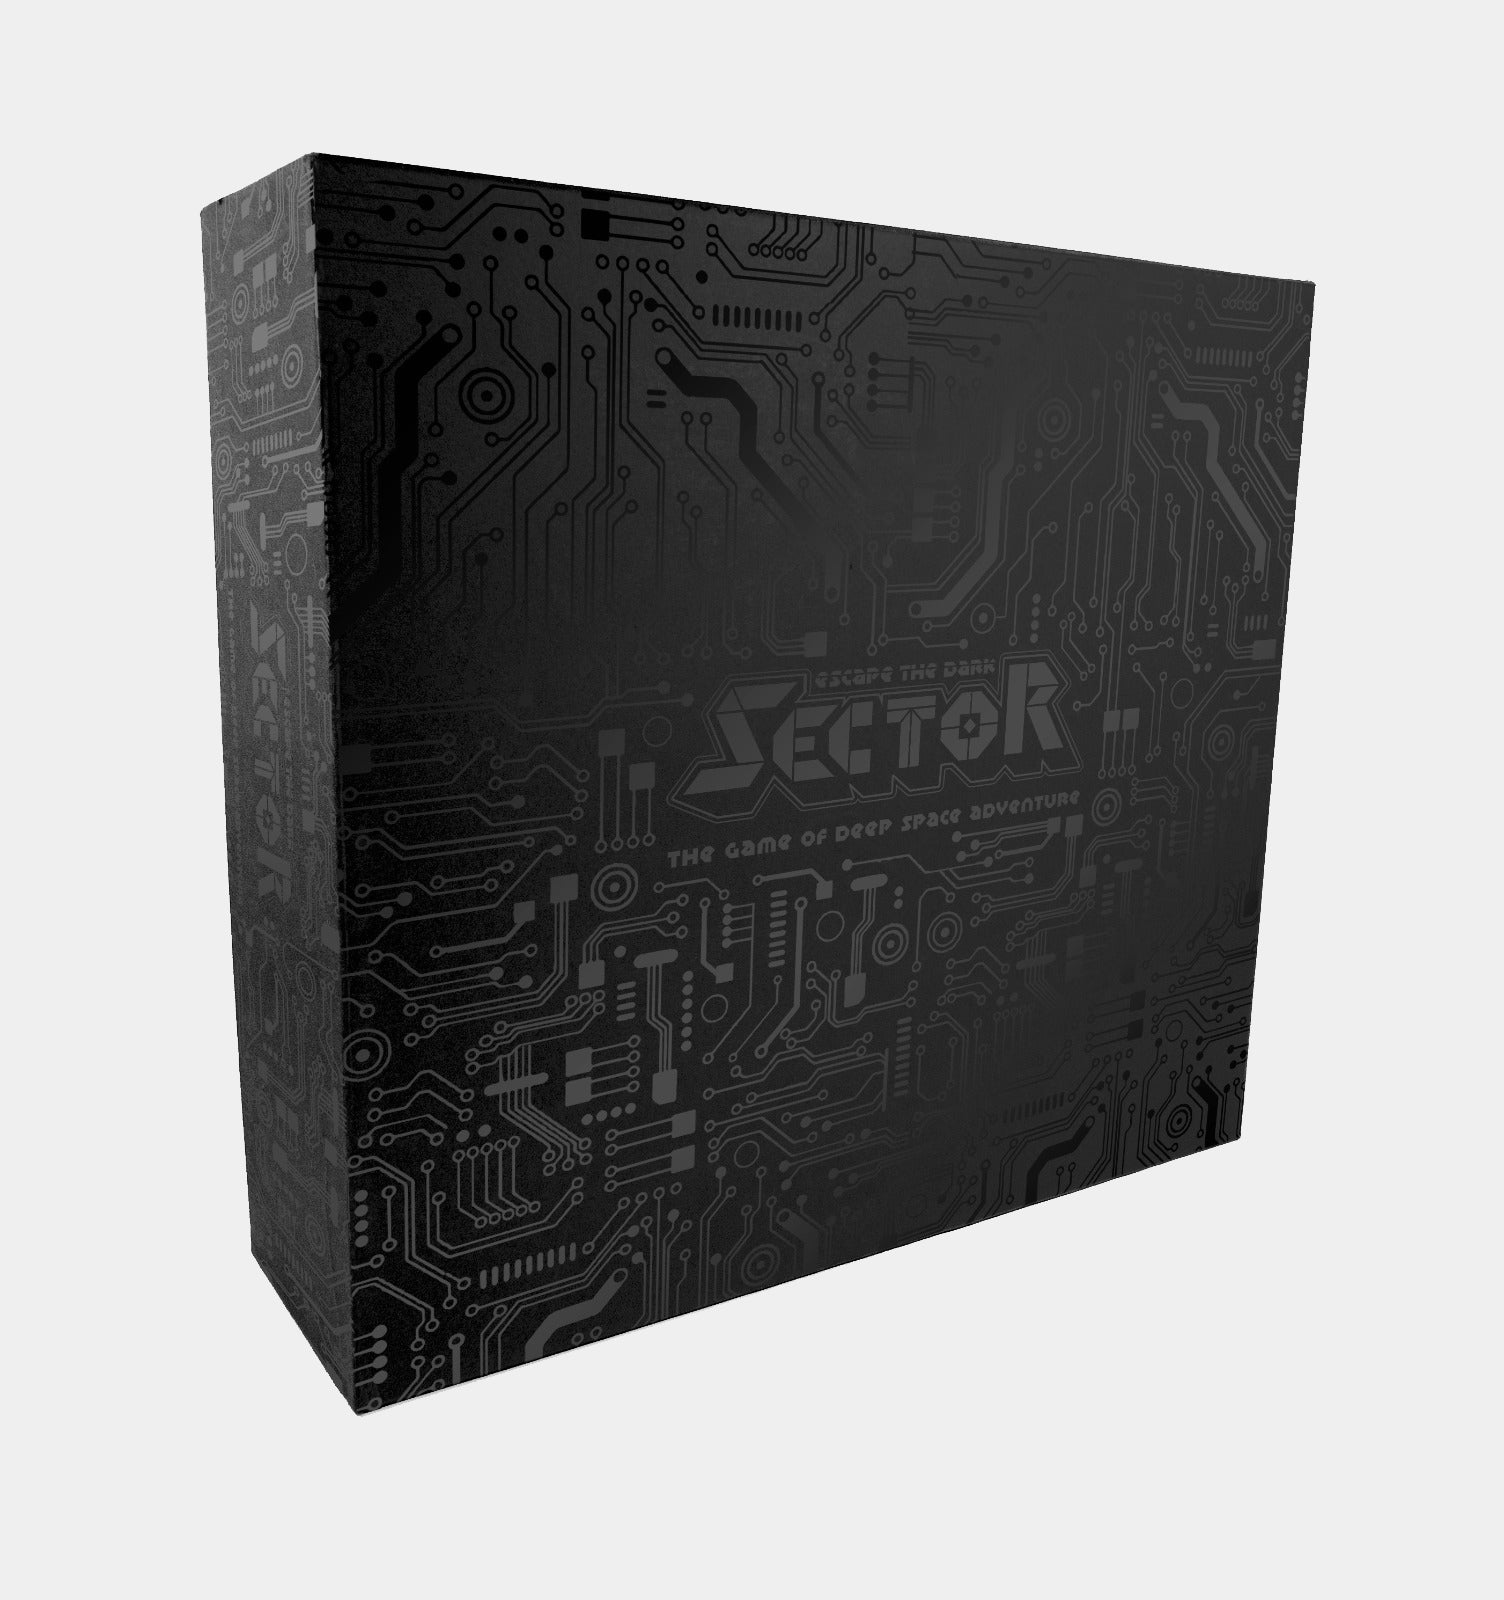 Sector 1 Box Set